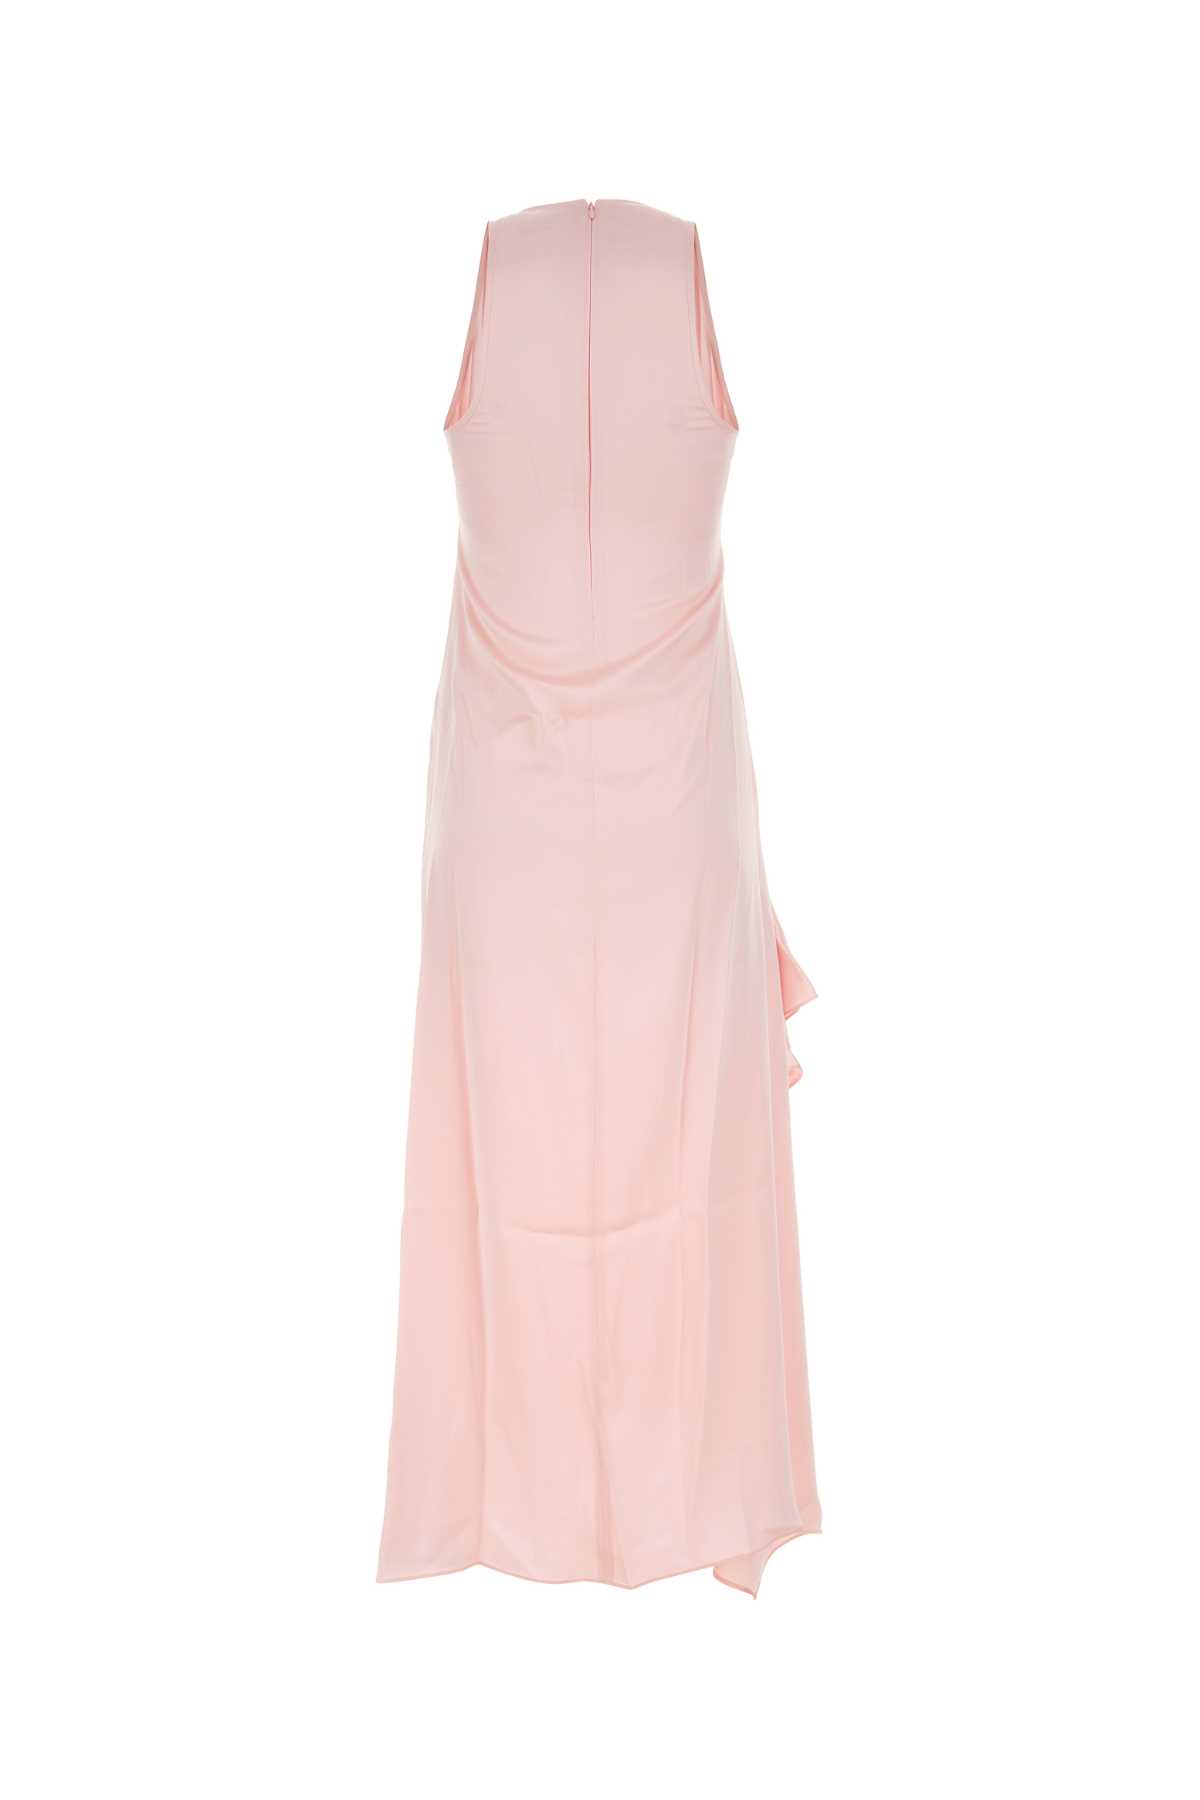 Jw Anderson Light Pink Satin Dress